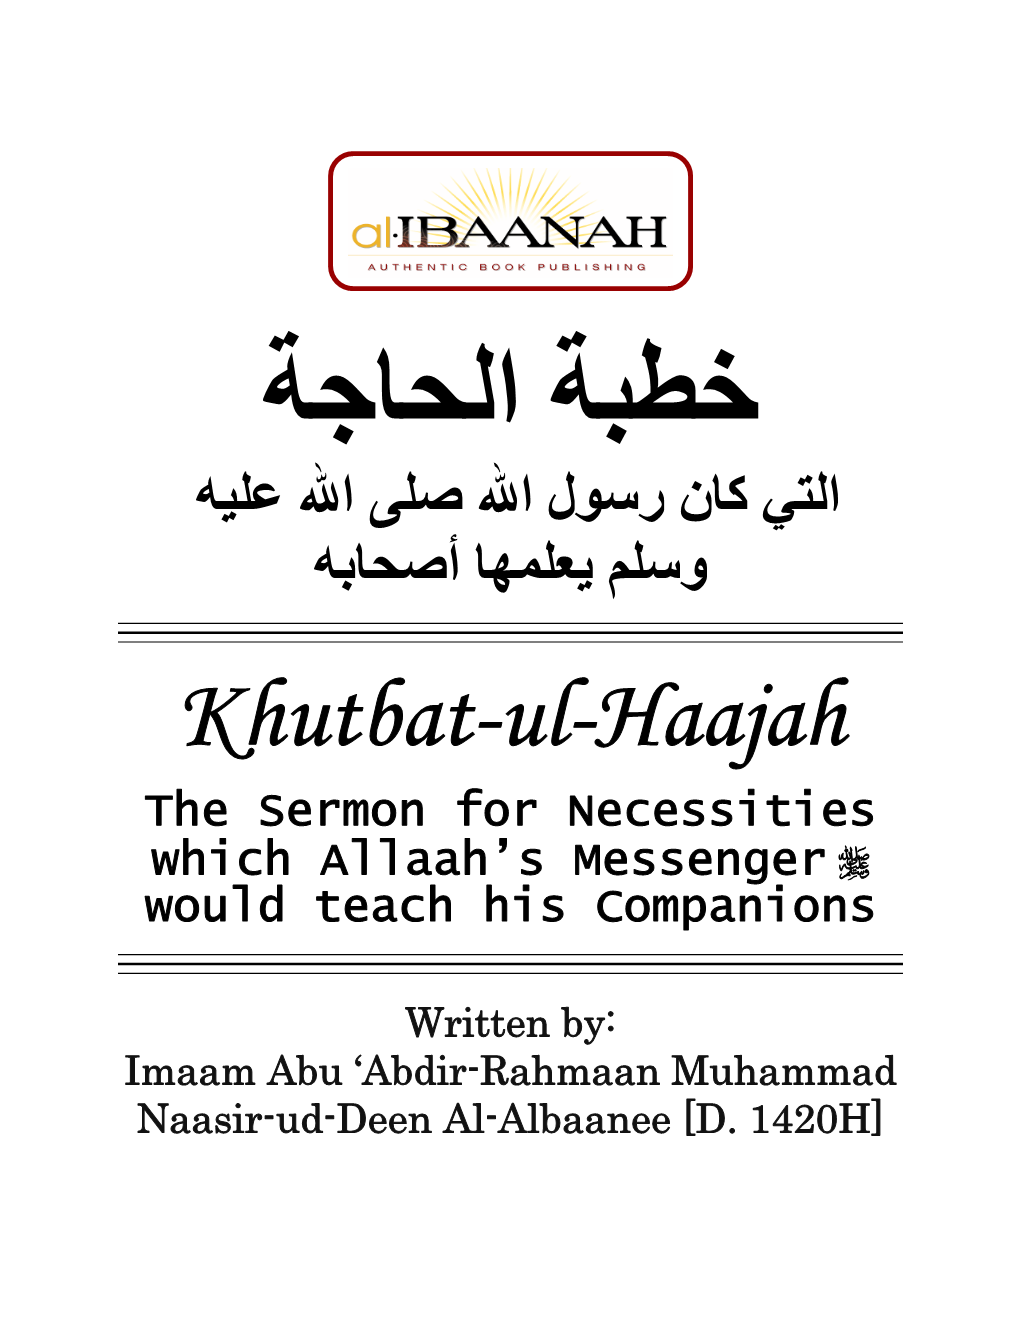 Khutbat-Ul-Haajah [The Sermon for Necessities]